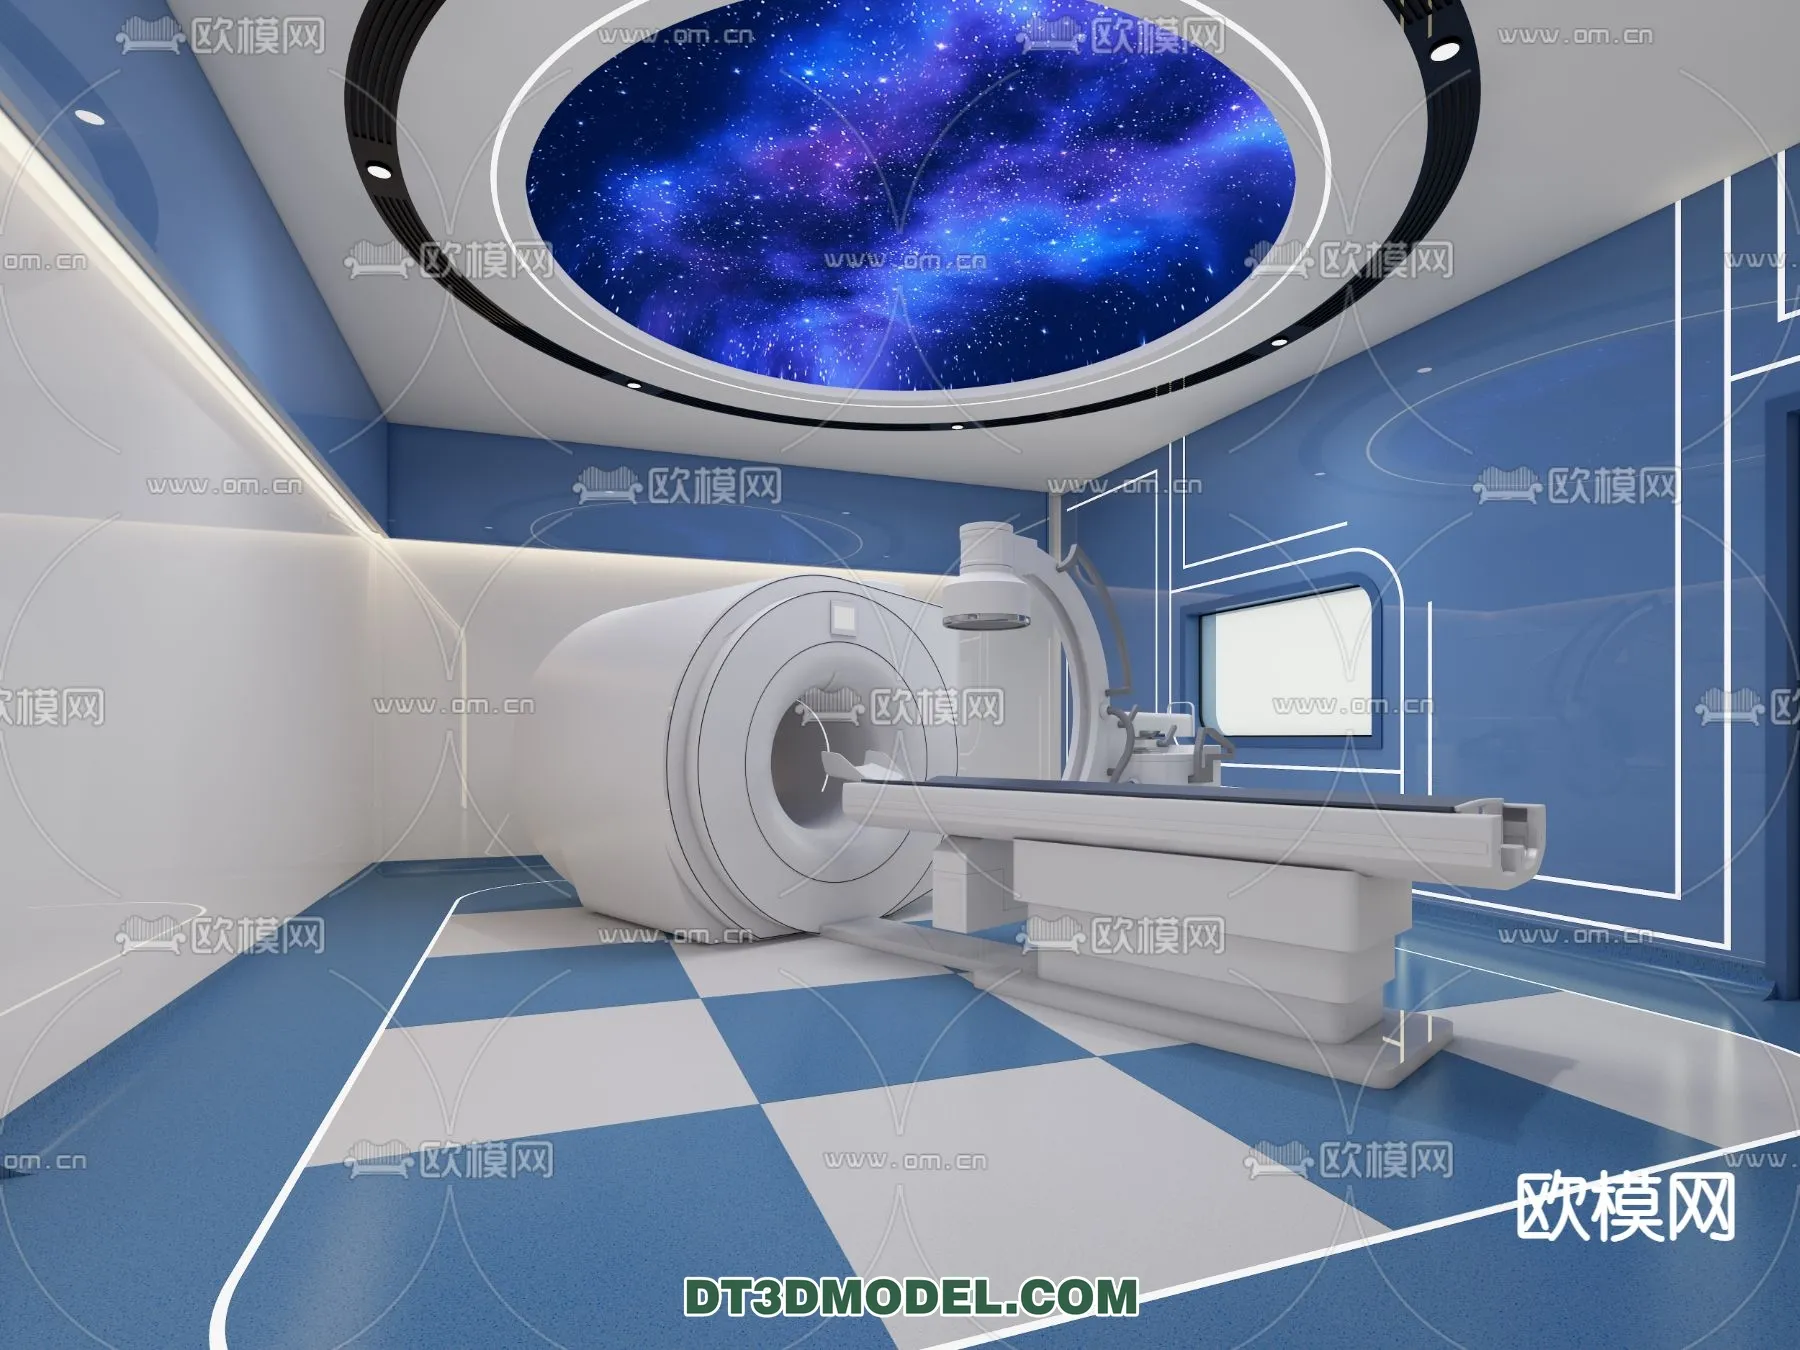 HOSPITAL 3D SCENES – MODERN – 0082